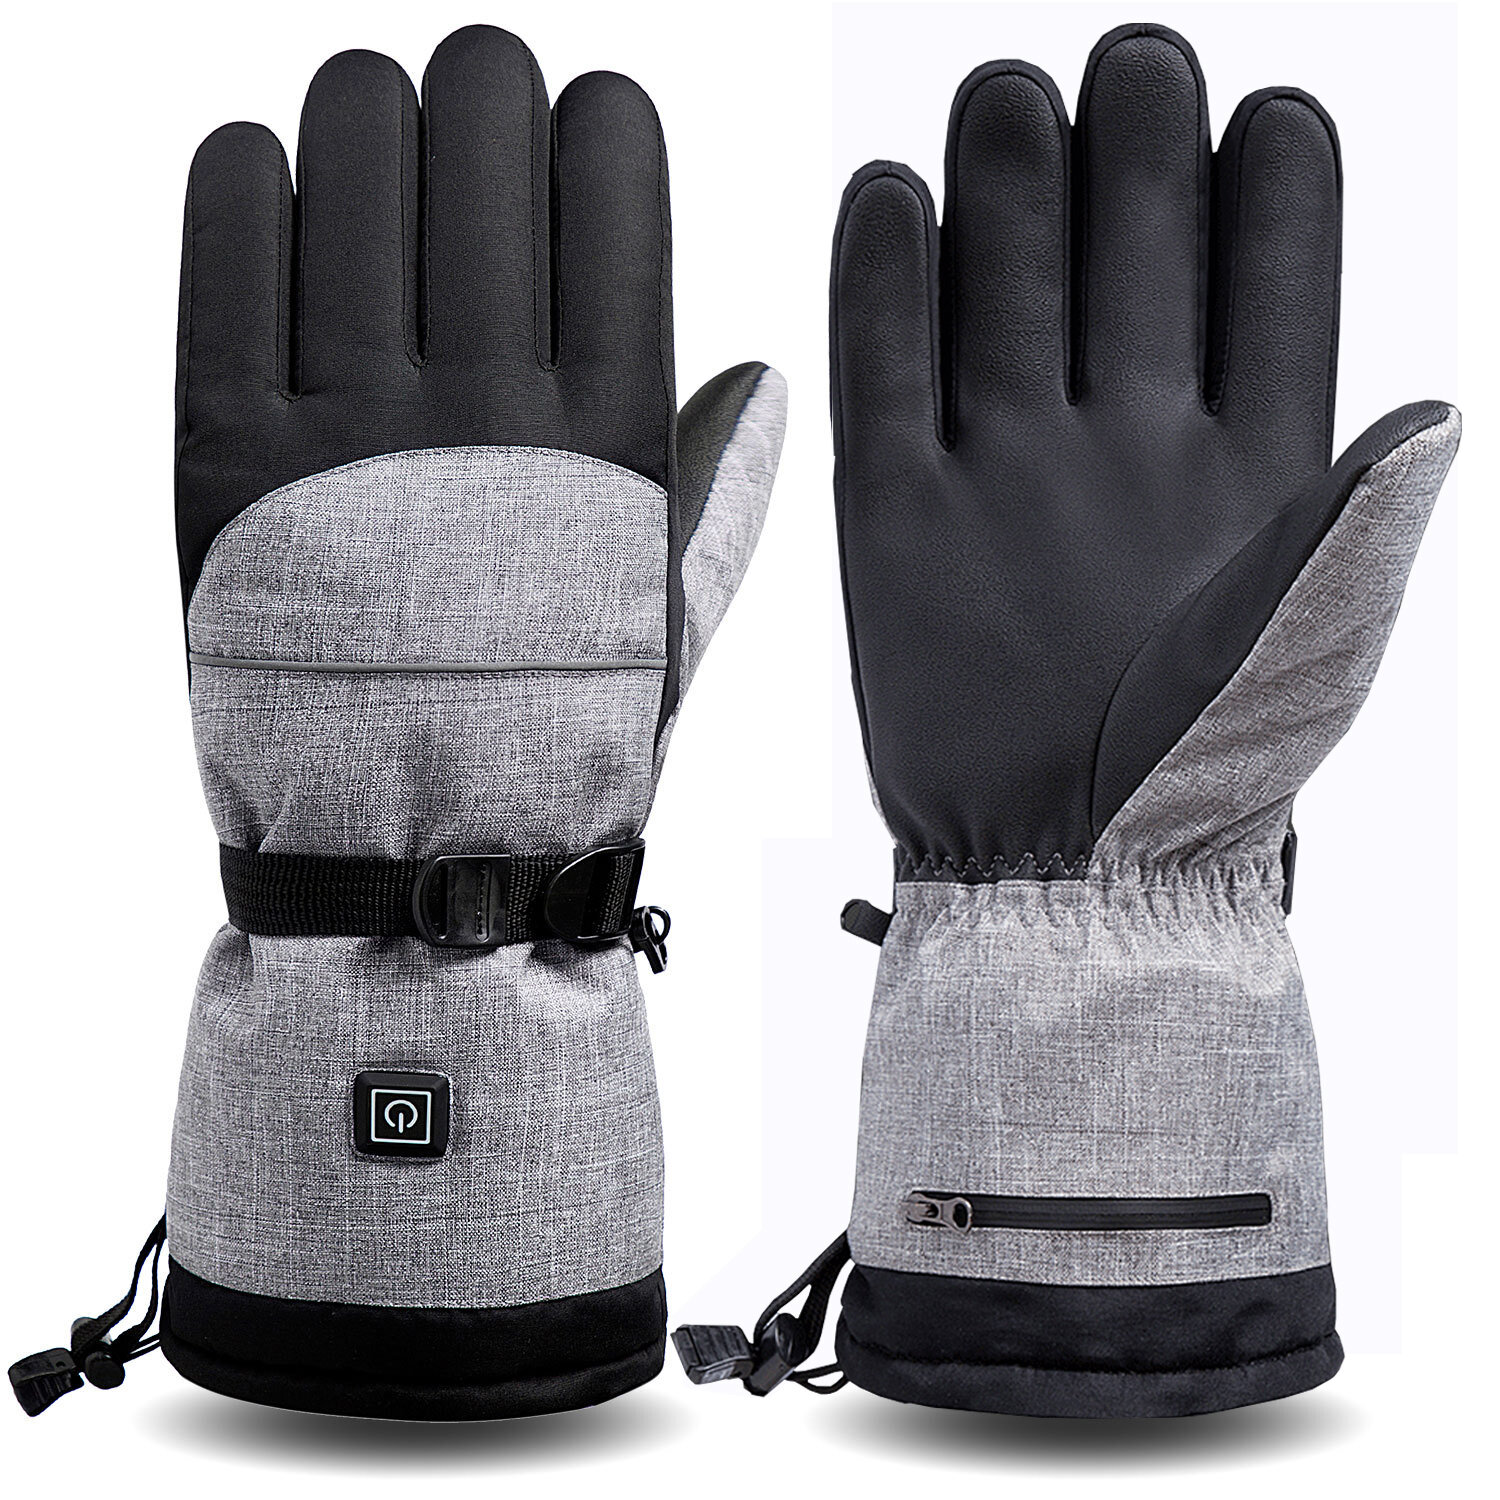 banggood guanti per moto con controllo di temperatura a 3 livelli + batteria da 5000mah. guanti riscaldati invernali per sport al